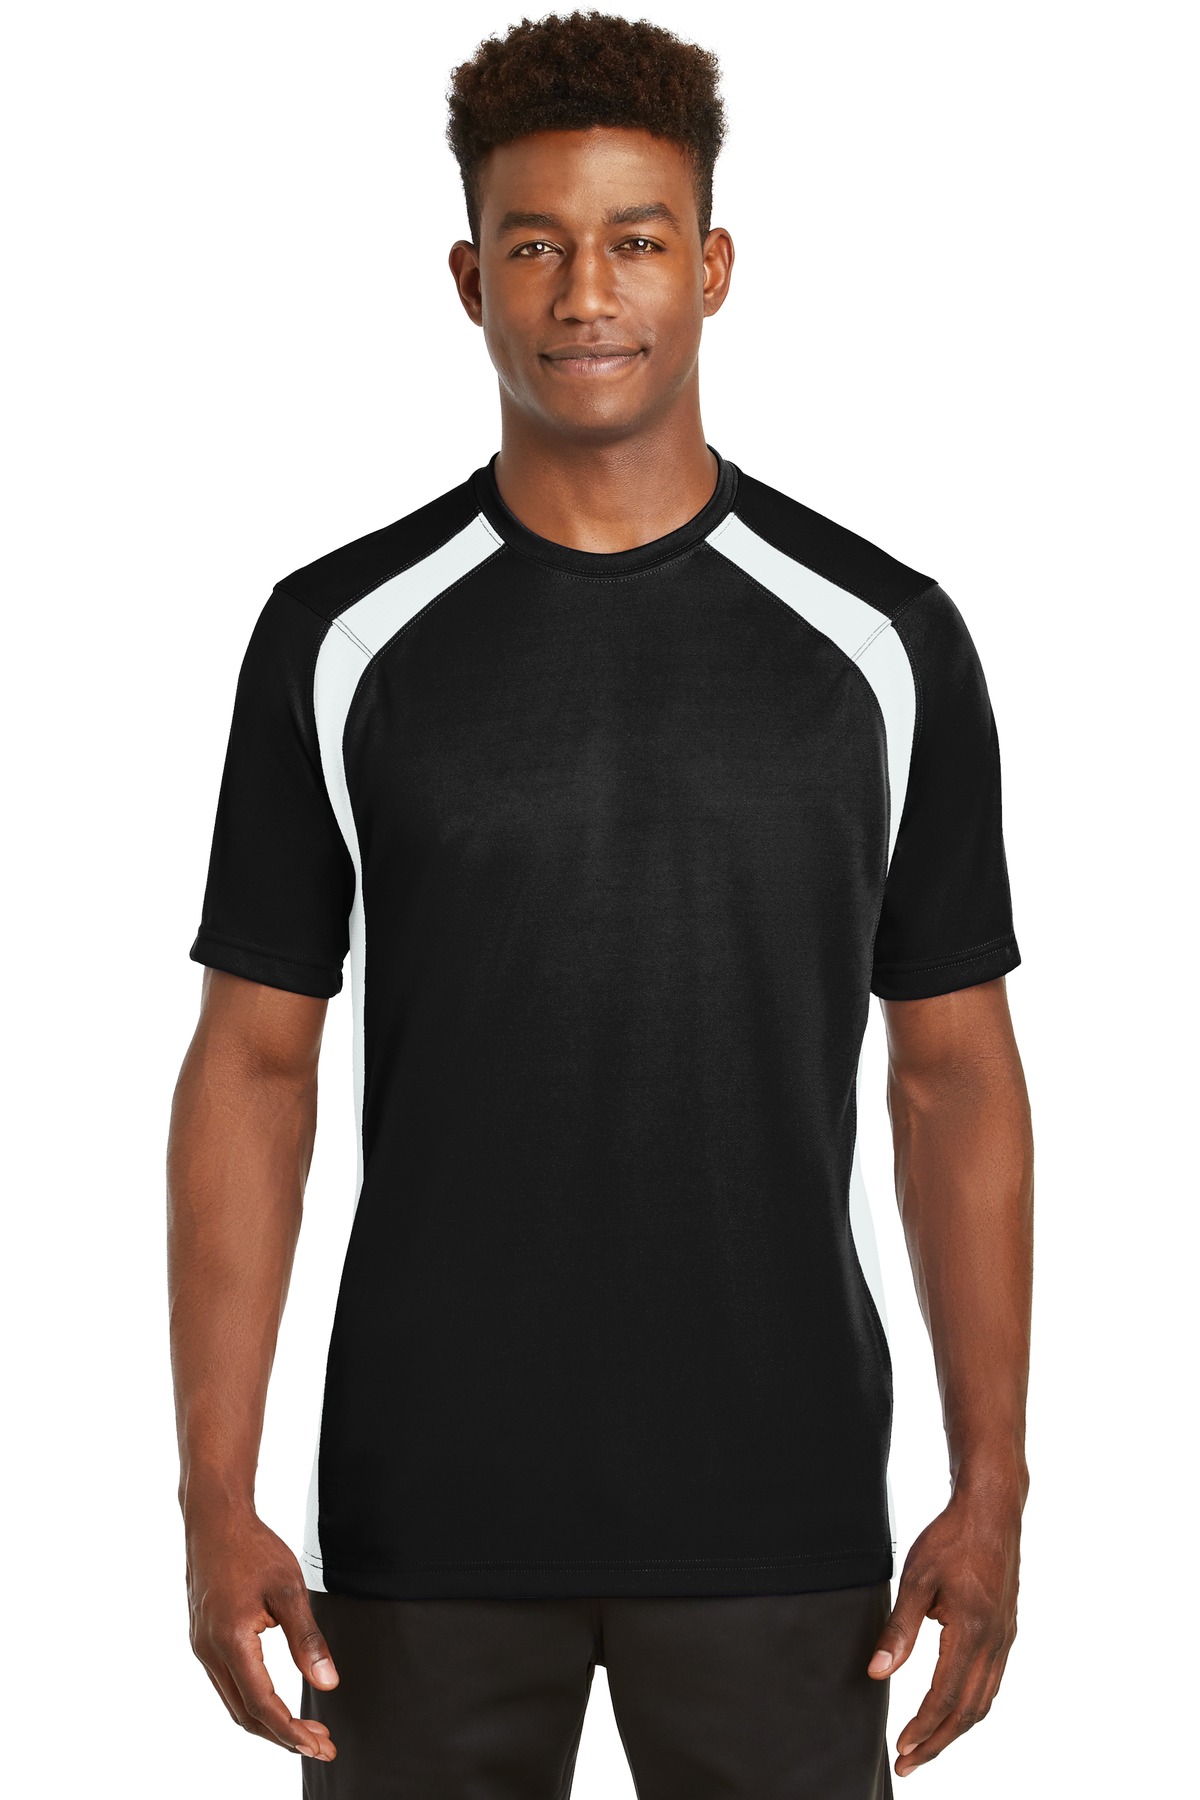 Sport-Tek Activewear T-Shirts for Hospitality ® Dry Zone® Colorblock Crew.-Sport-Tek